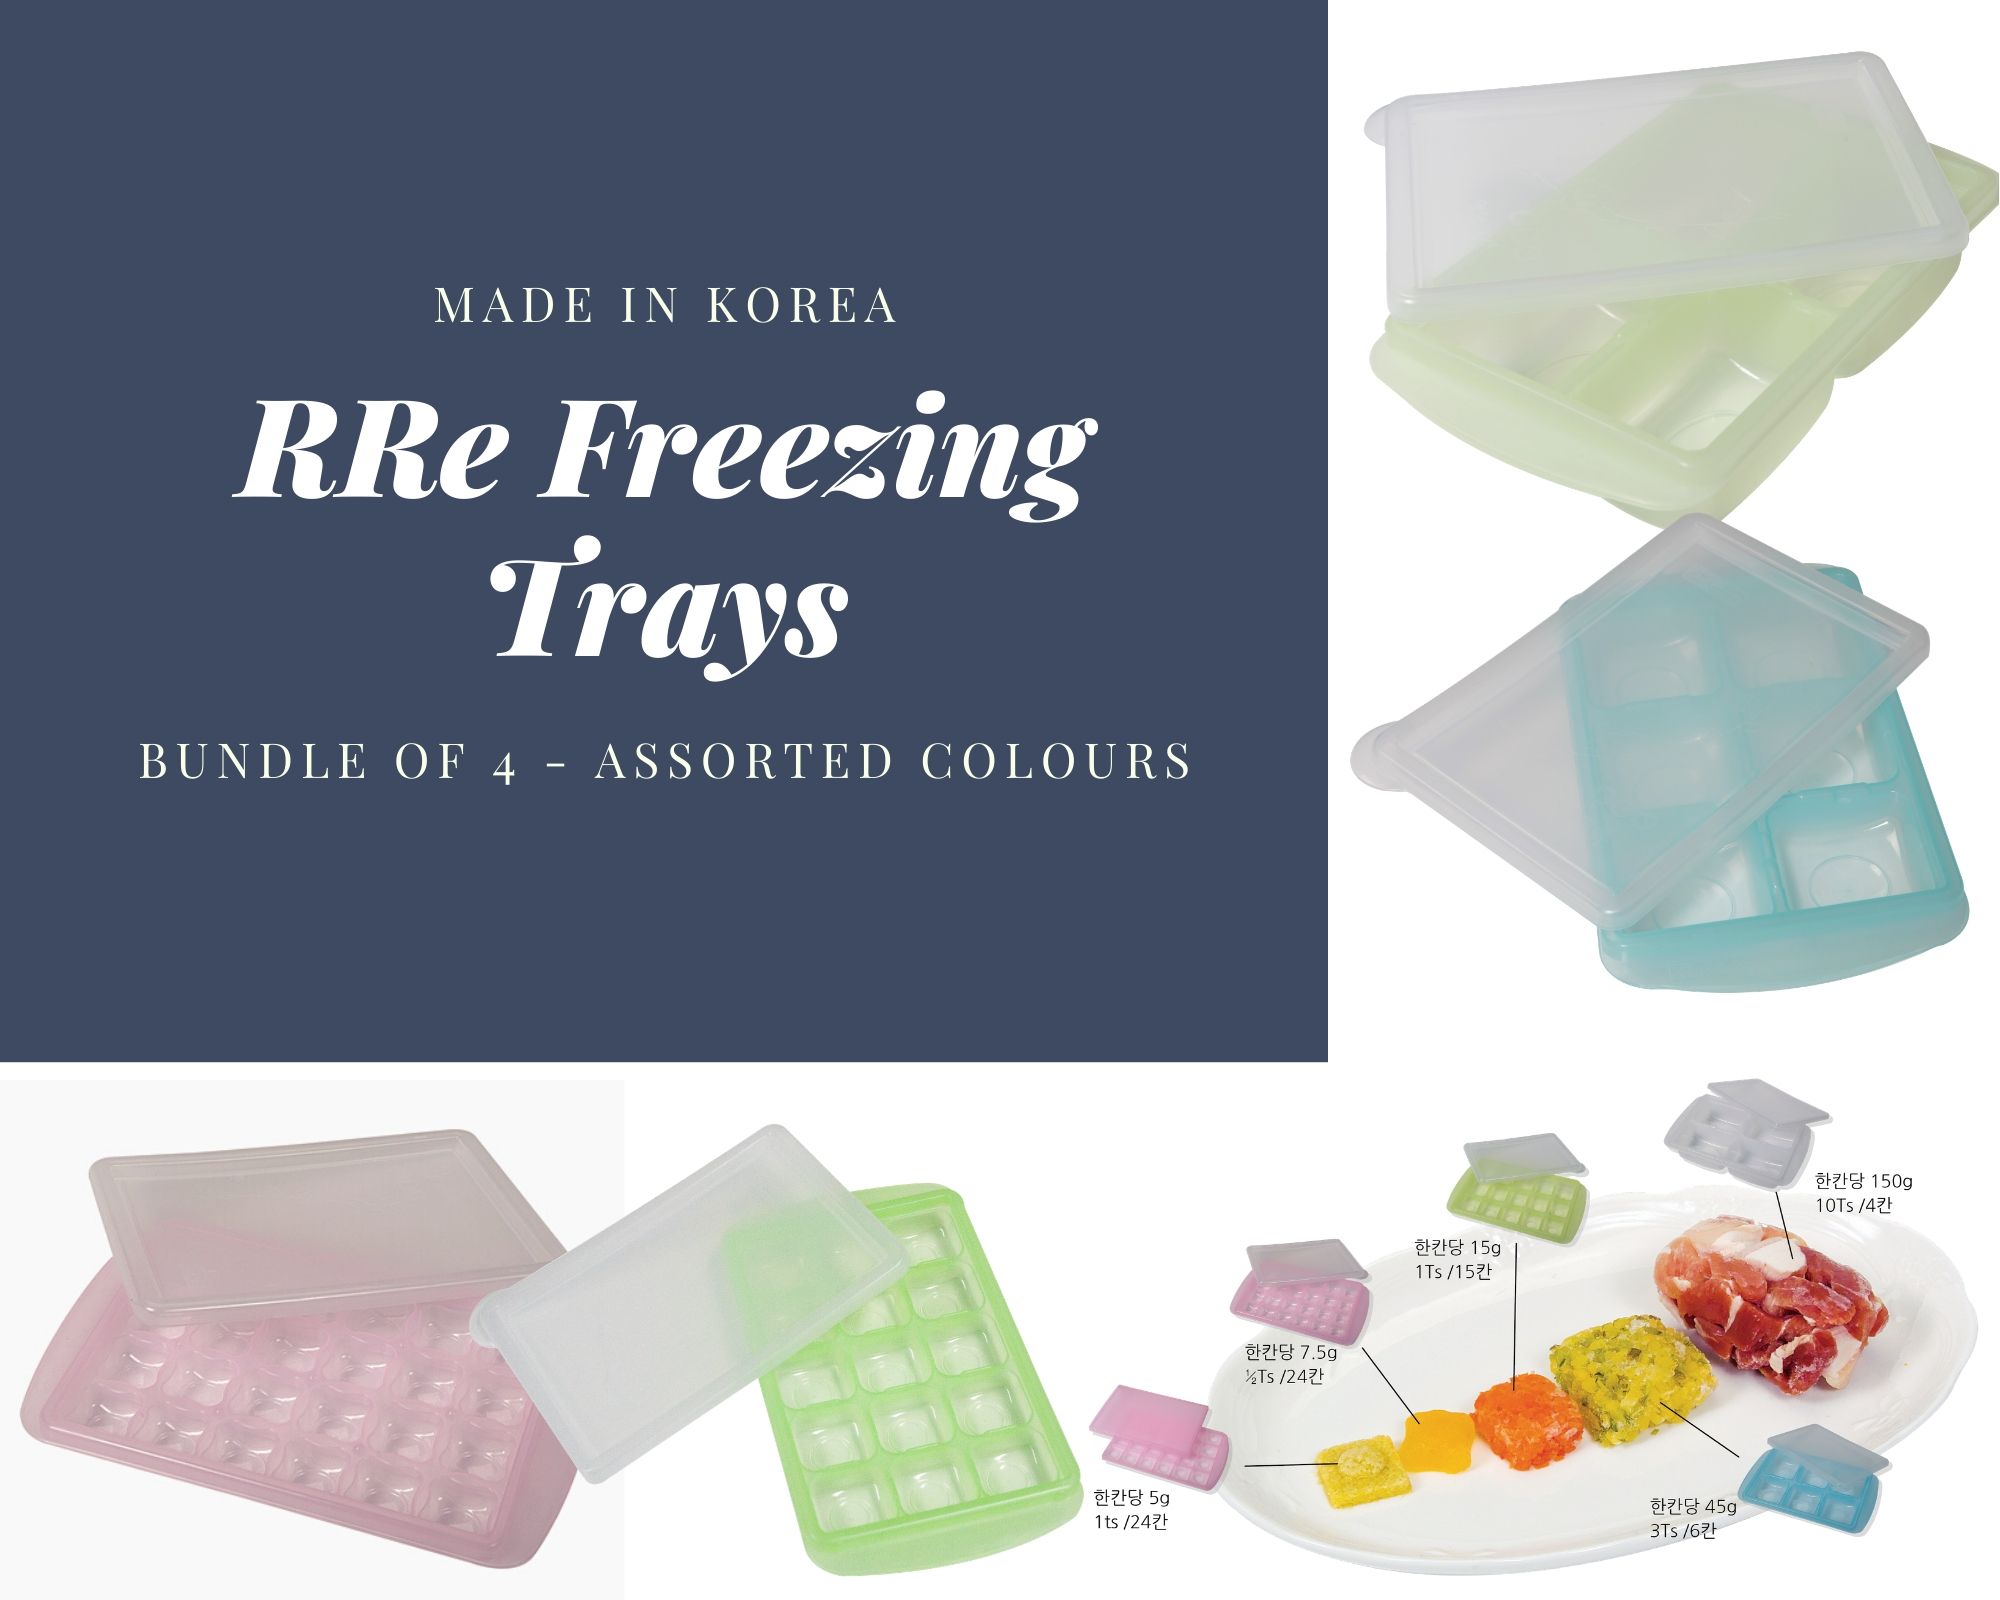 RRE Freezing Tray 4 Sizes (7.5ml + 15ml + 45ml + 150ml)